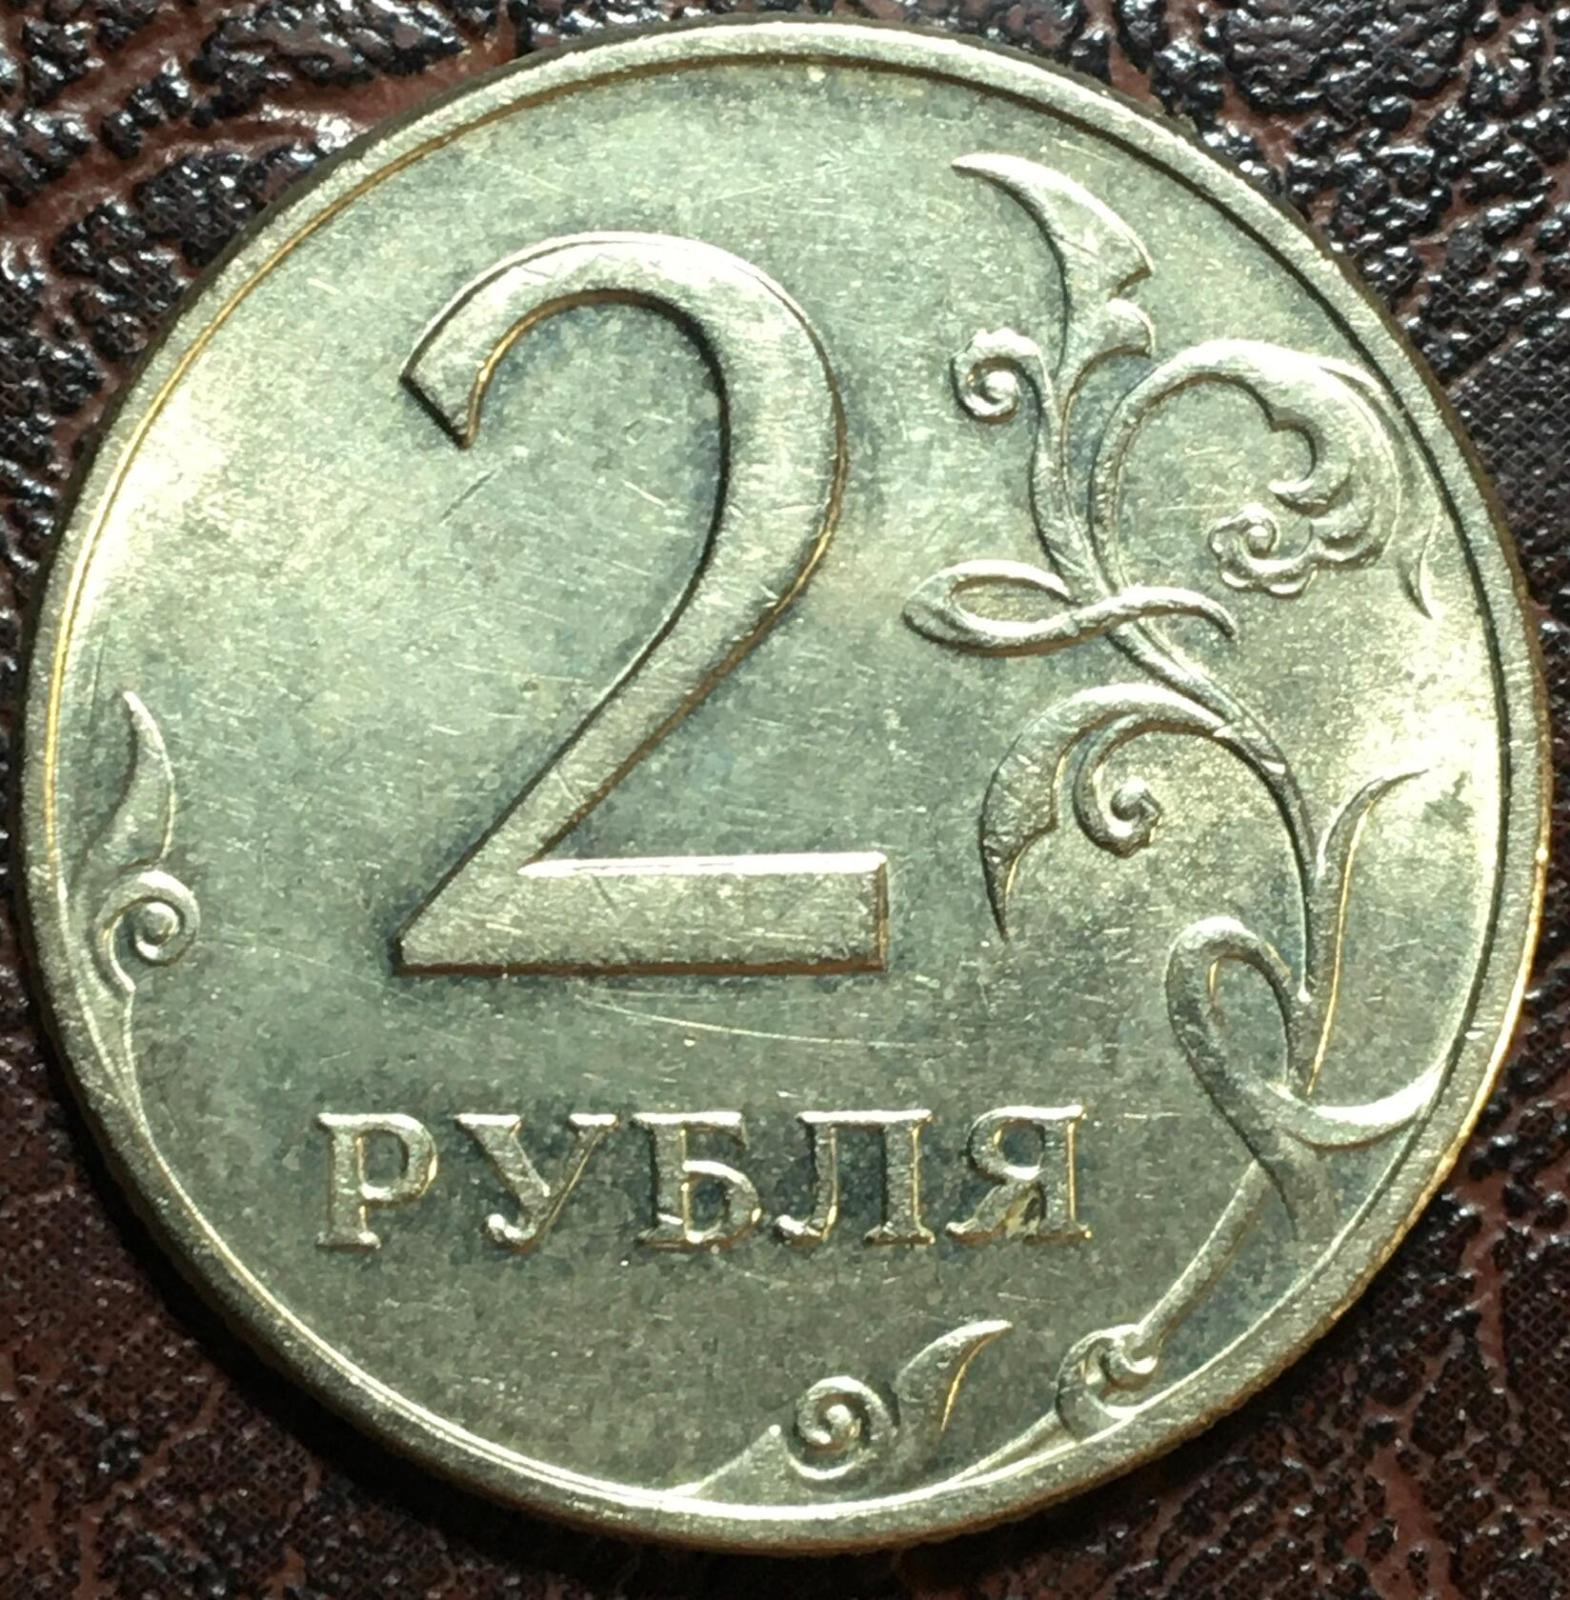 5 рублей с литра. 2 Рубля. 2 Рубля 2009 ММД шт б. 4 Рубля 2 рублями. 2 Рубля бегут.